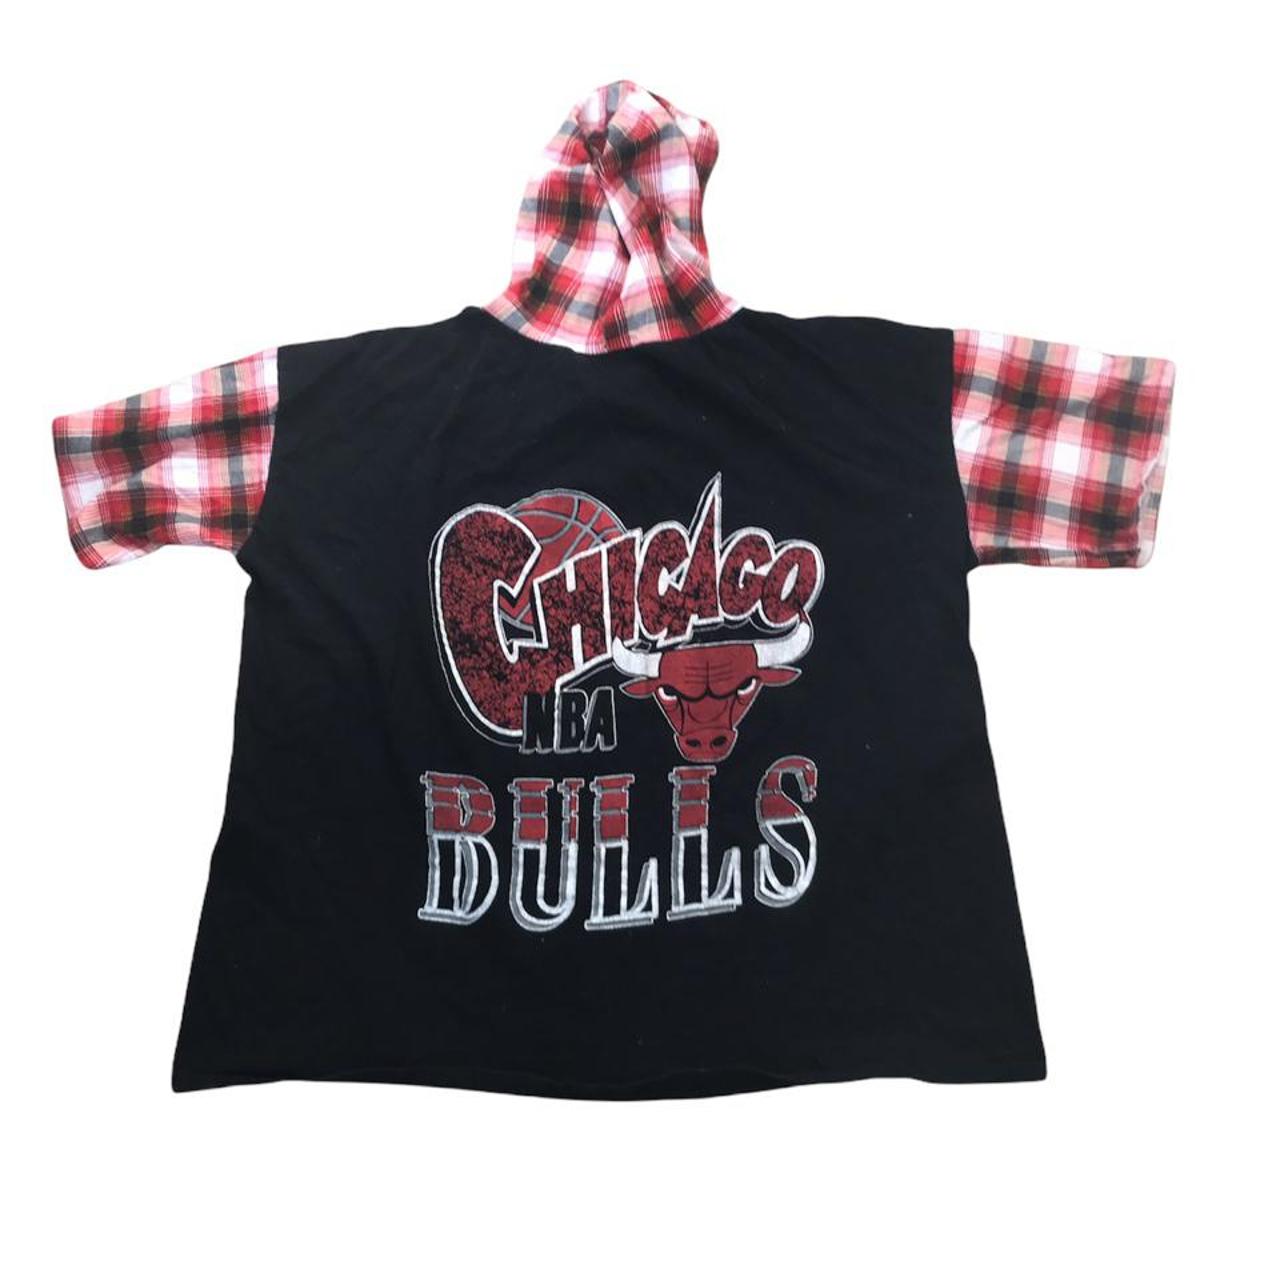 Product Image 2 - Vintage Chicago Bulls Shirt 

-